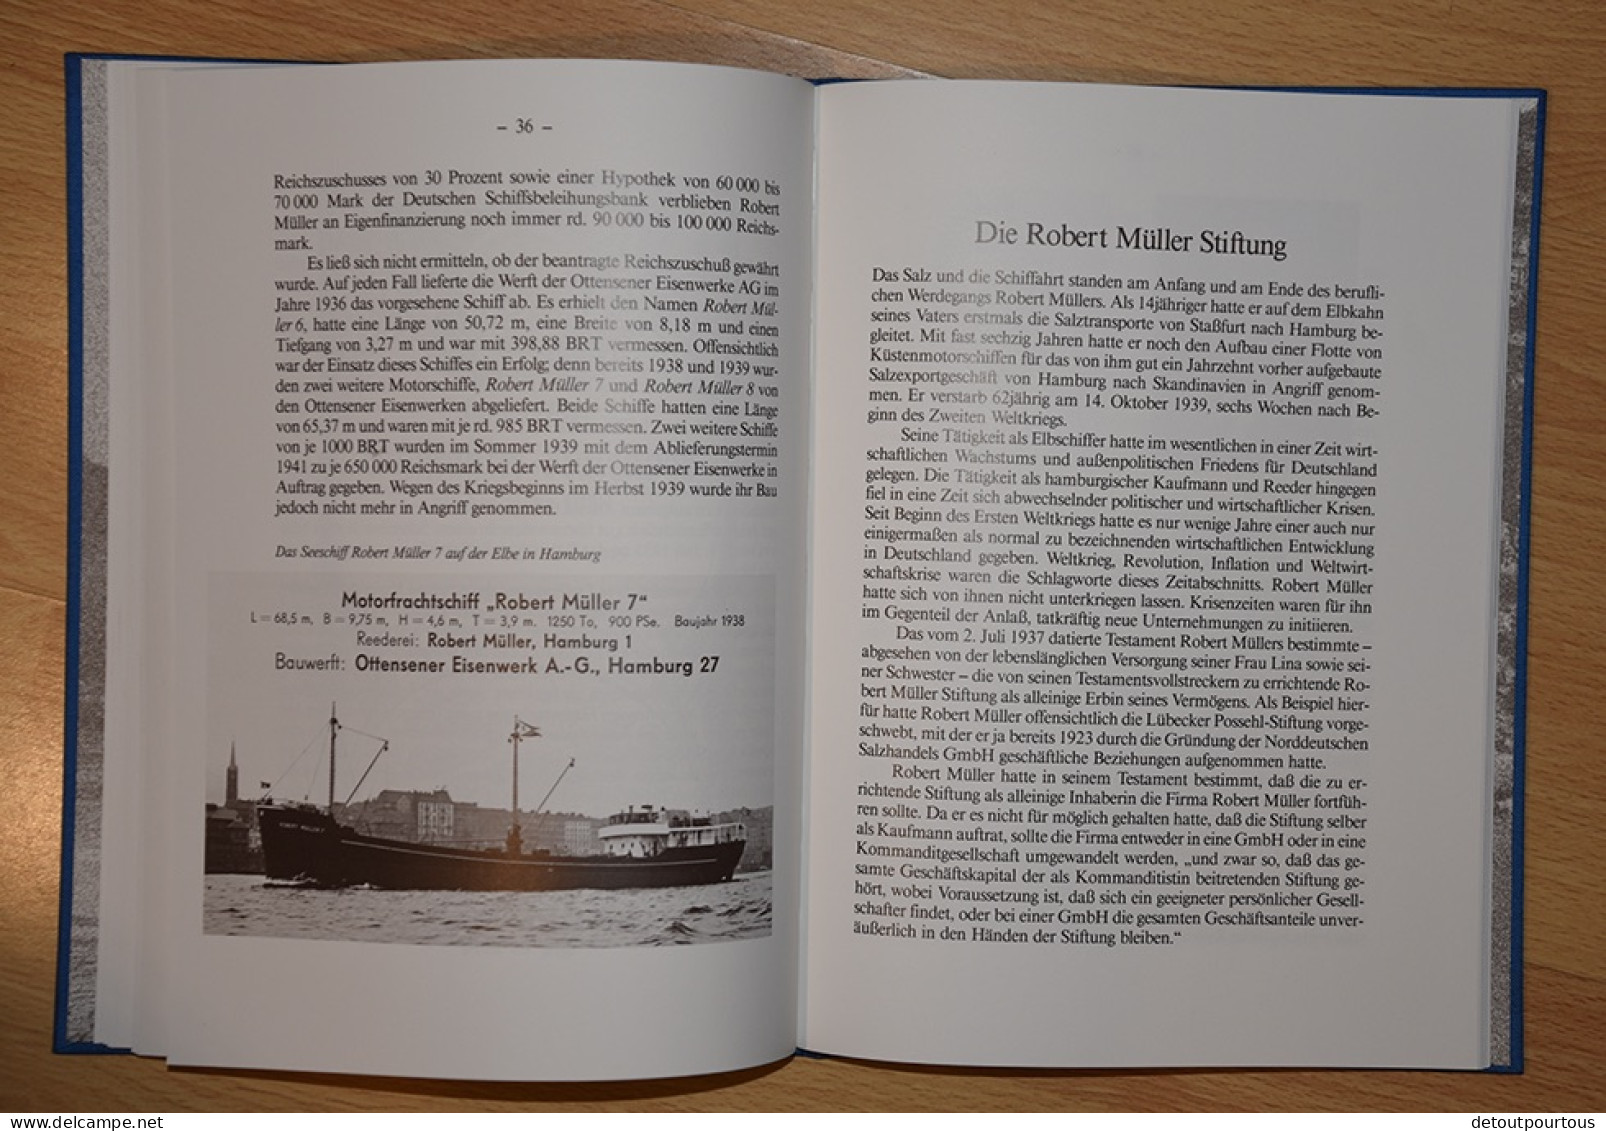 75 JAHRE ROBERT MULLER HAMBURG 1911 1986 Schiffahrt Schiff Gechichte boat company history